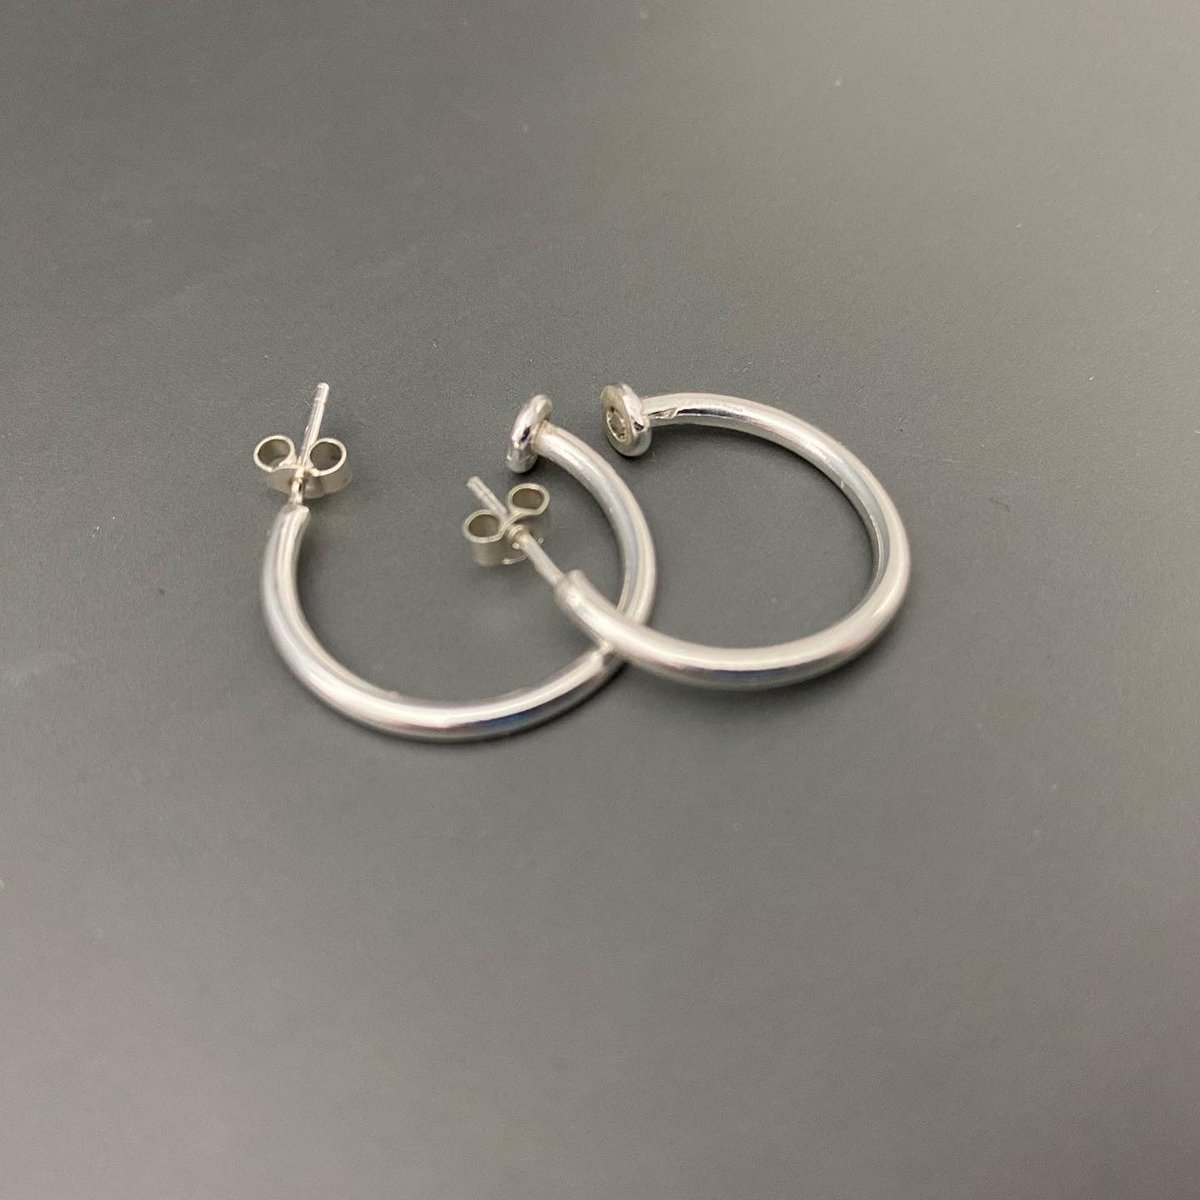 Sterling Silver Hoop Earrings tuppu.net/ff55d1f2 #MHHSBD #inbizhour ##UKGiftHour #HandmadeHour #giftideas #bizbubble #shopsmall #UKHashtags #SterlingSilverHoop